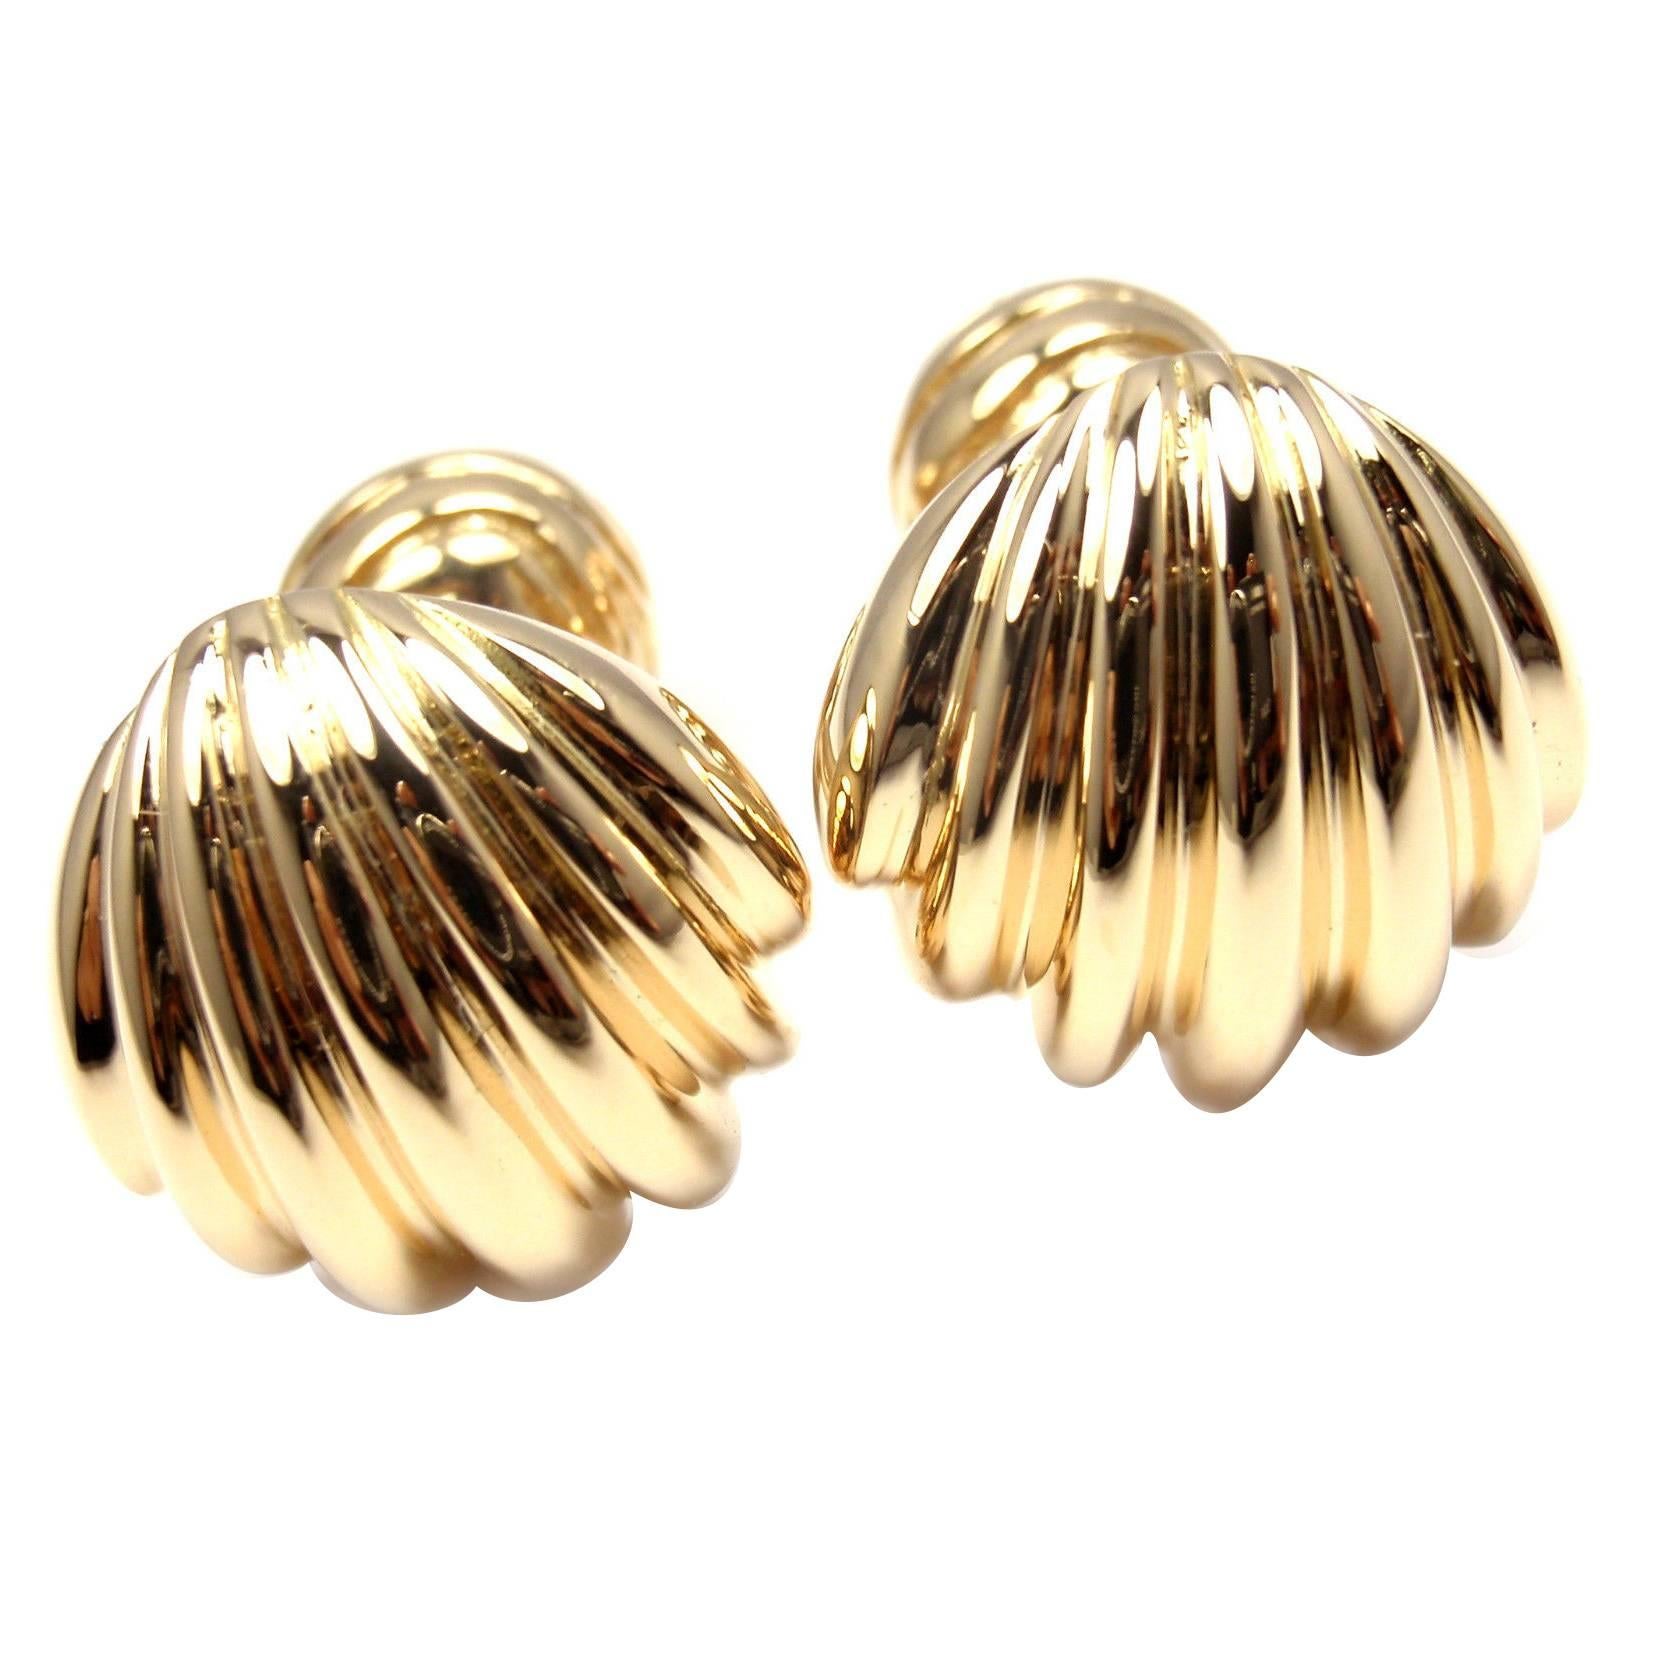 Tiffany & Co. Scalloped Shell Gold Cufflinks 